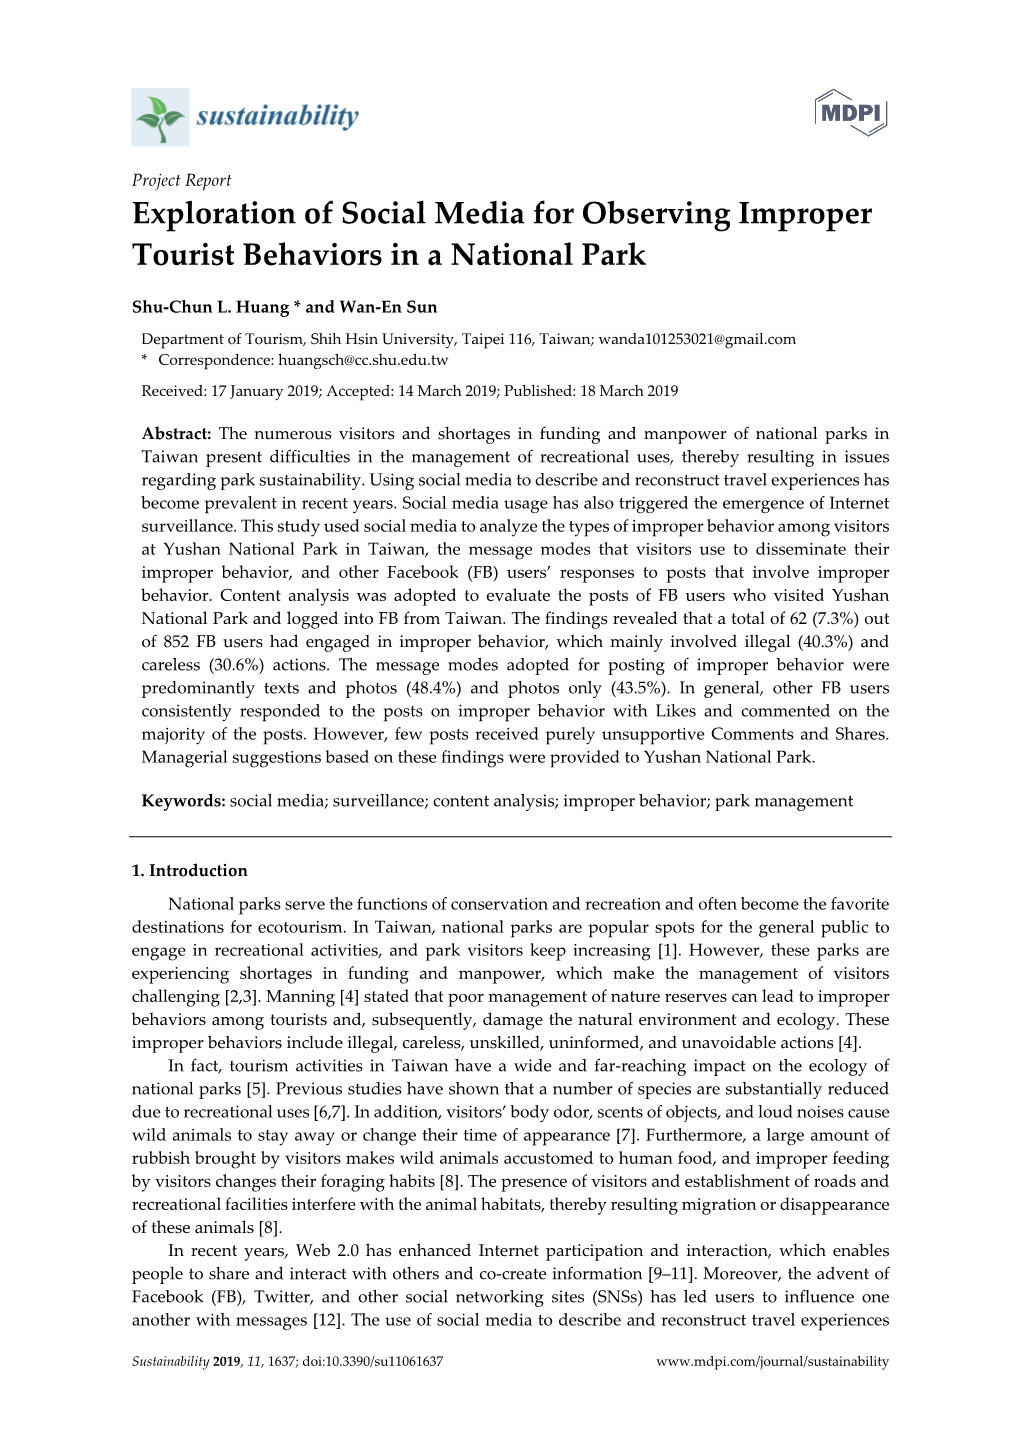 Exploration of Social Media for Observing Improper Tourist Behaviors in a National Park